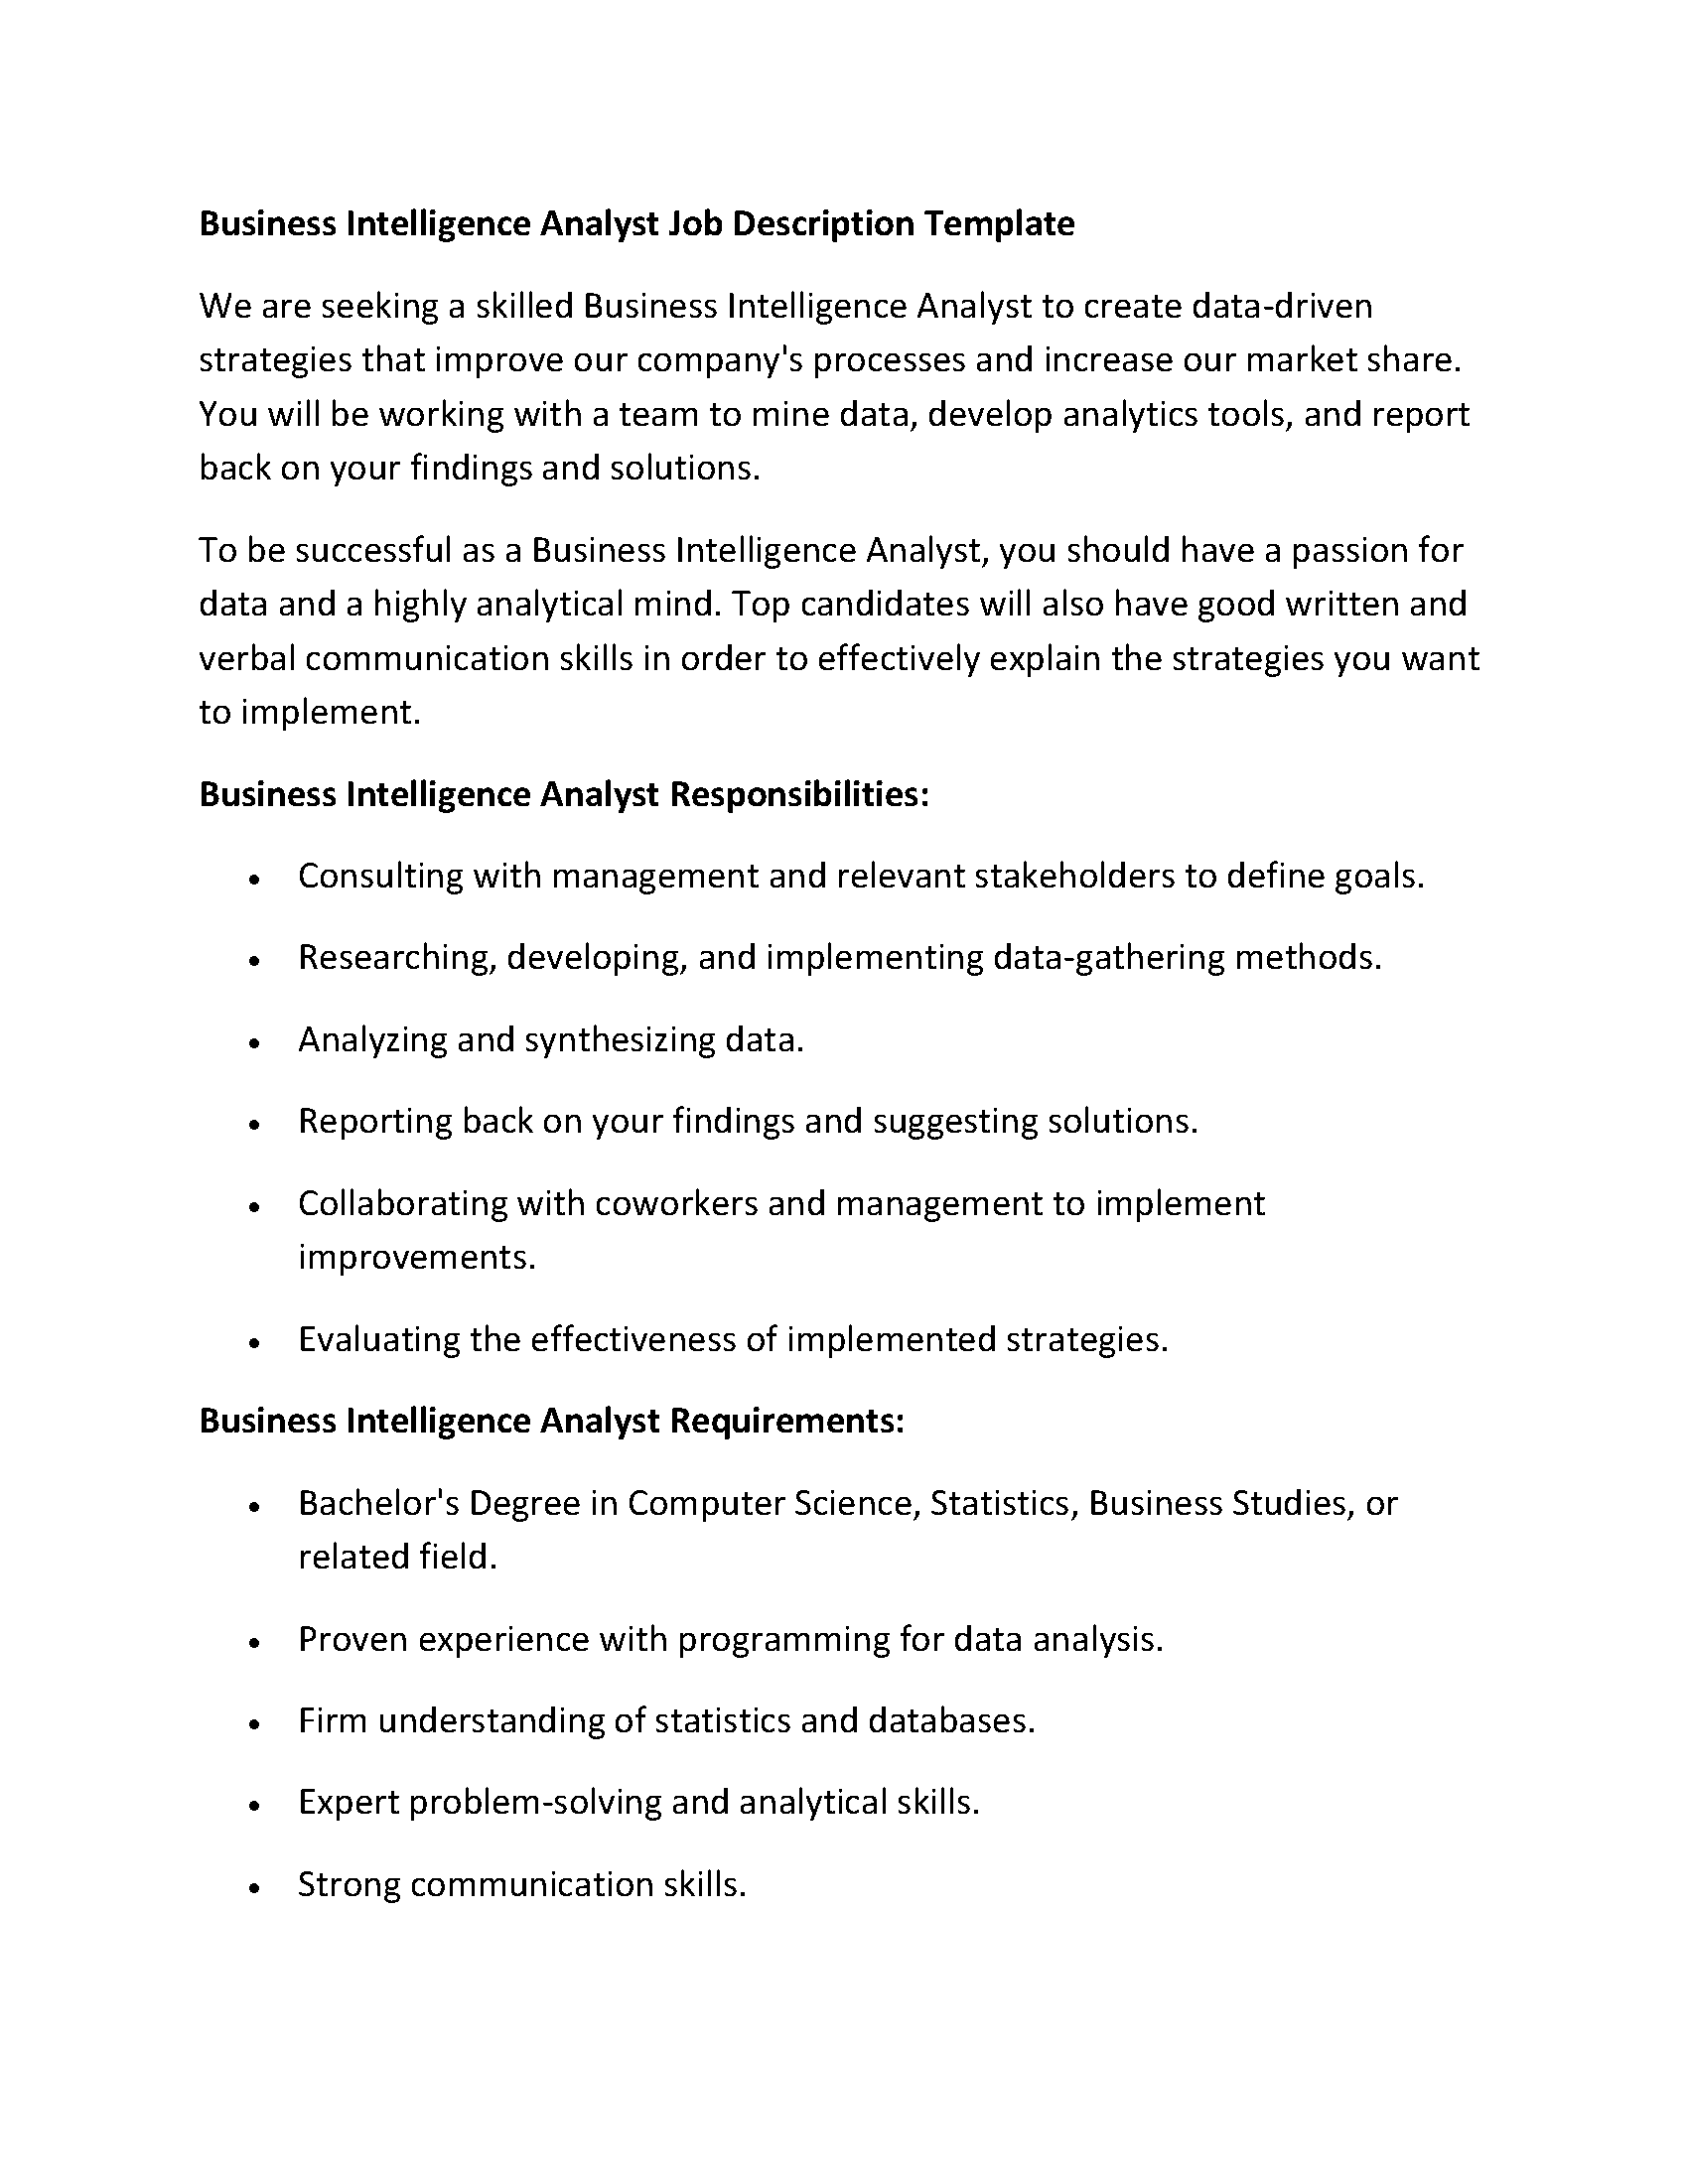 Business Intelligence Analyst Job Description Template